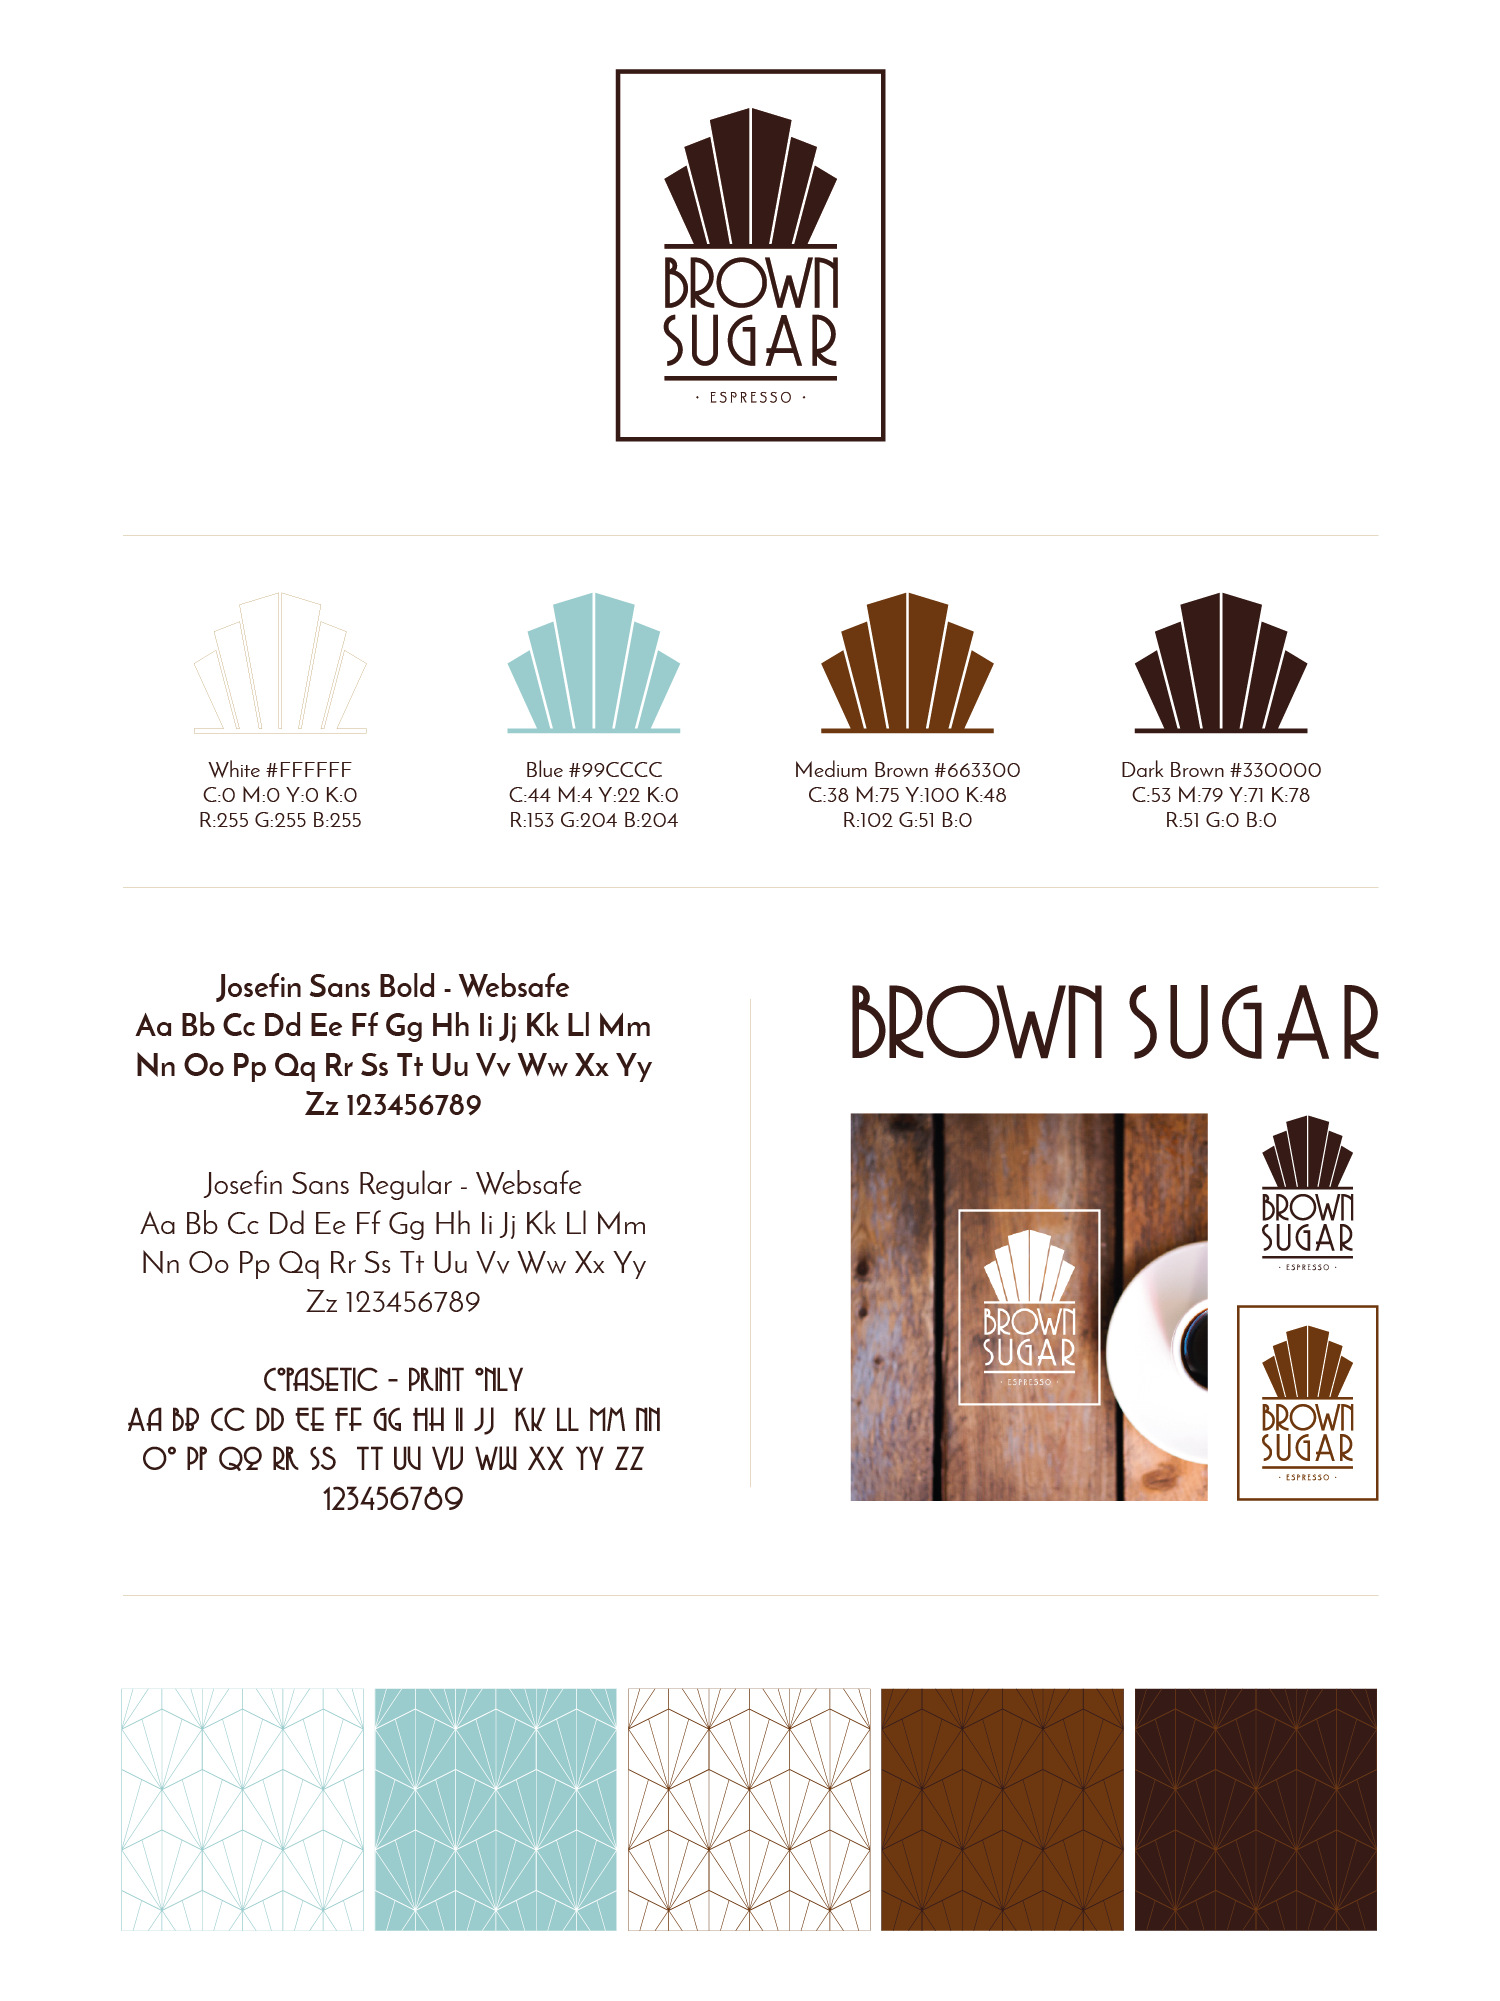 Brown Sugar Espresso Branding Board